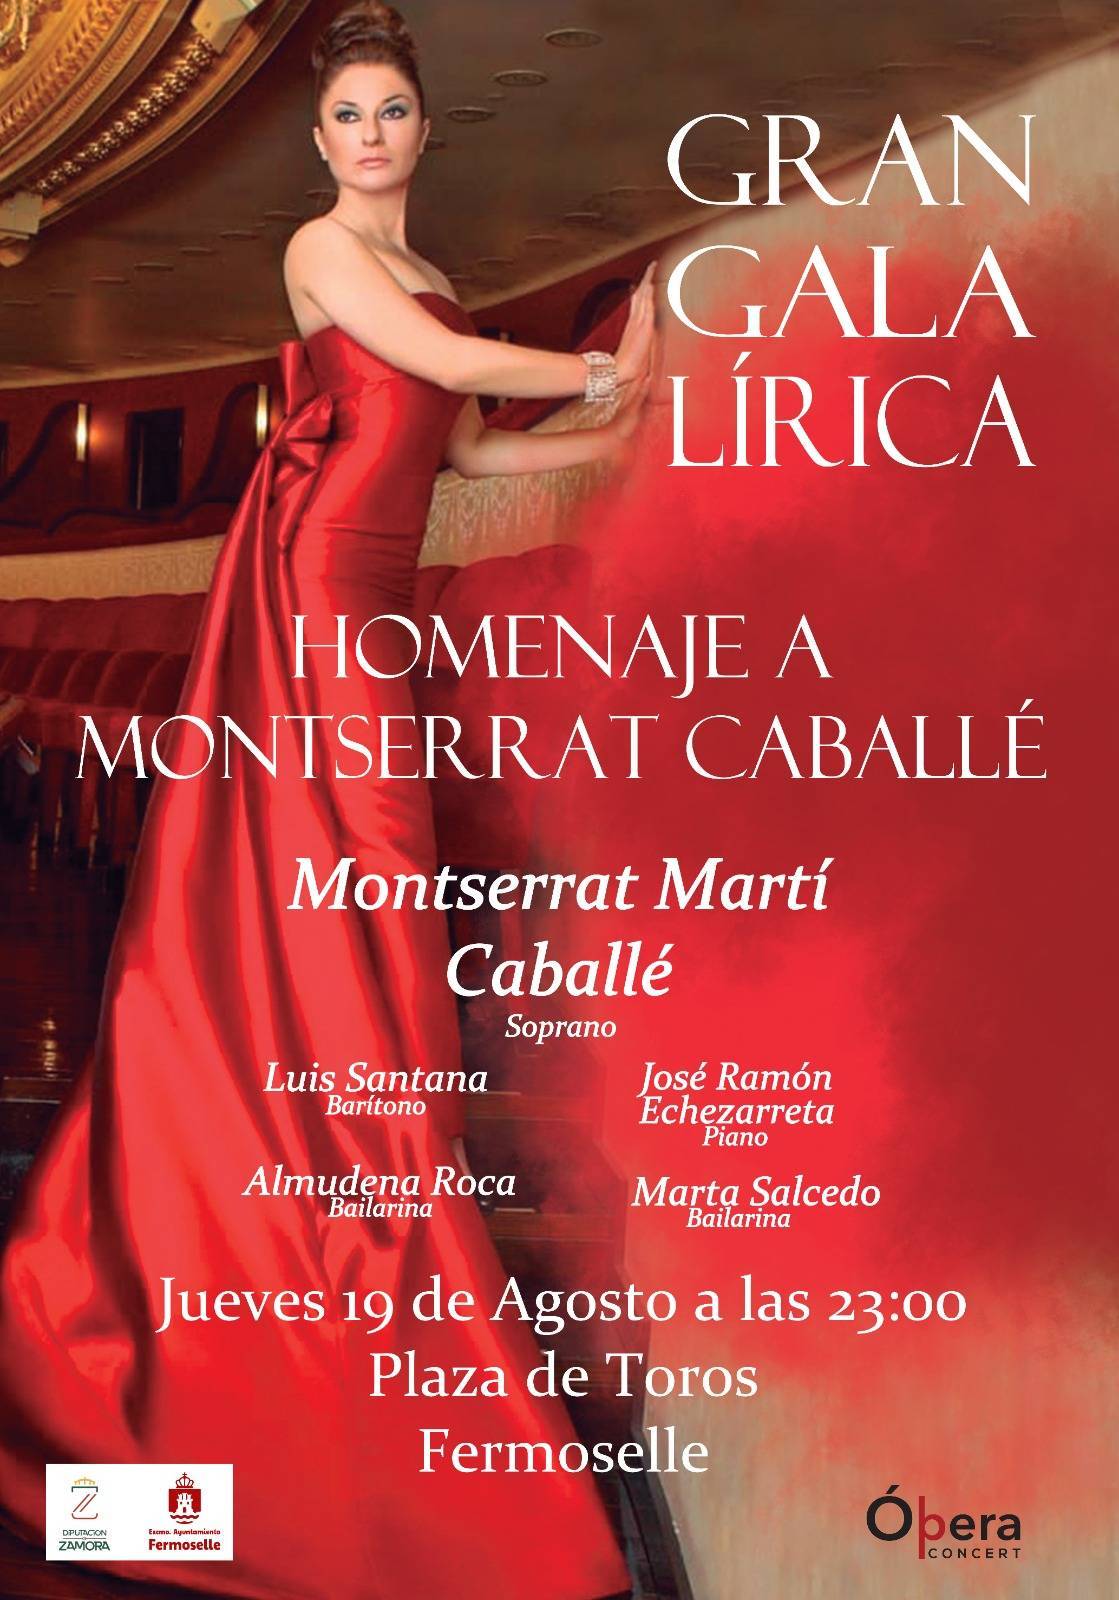 Gran gala lírica (2021) - Fermoselle (Zamora)